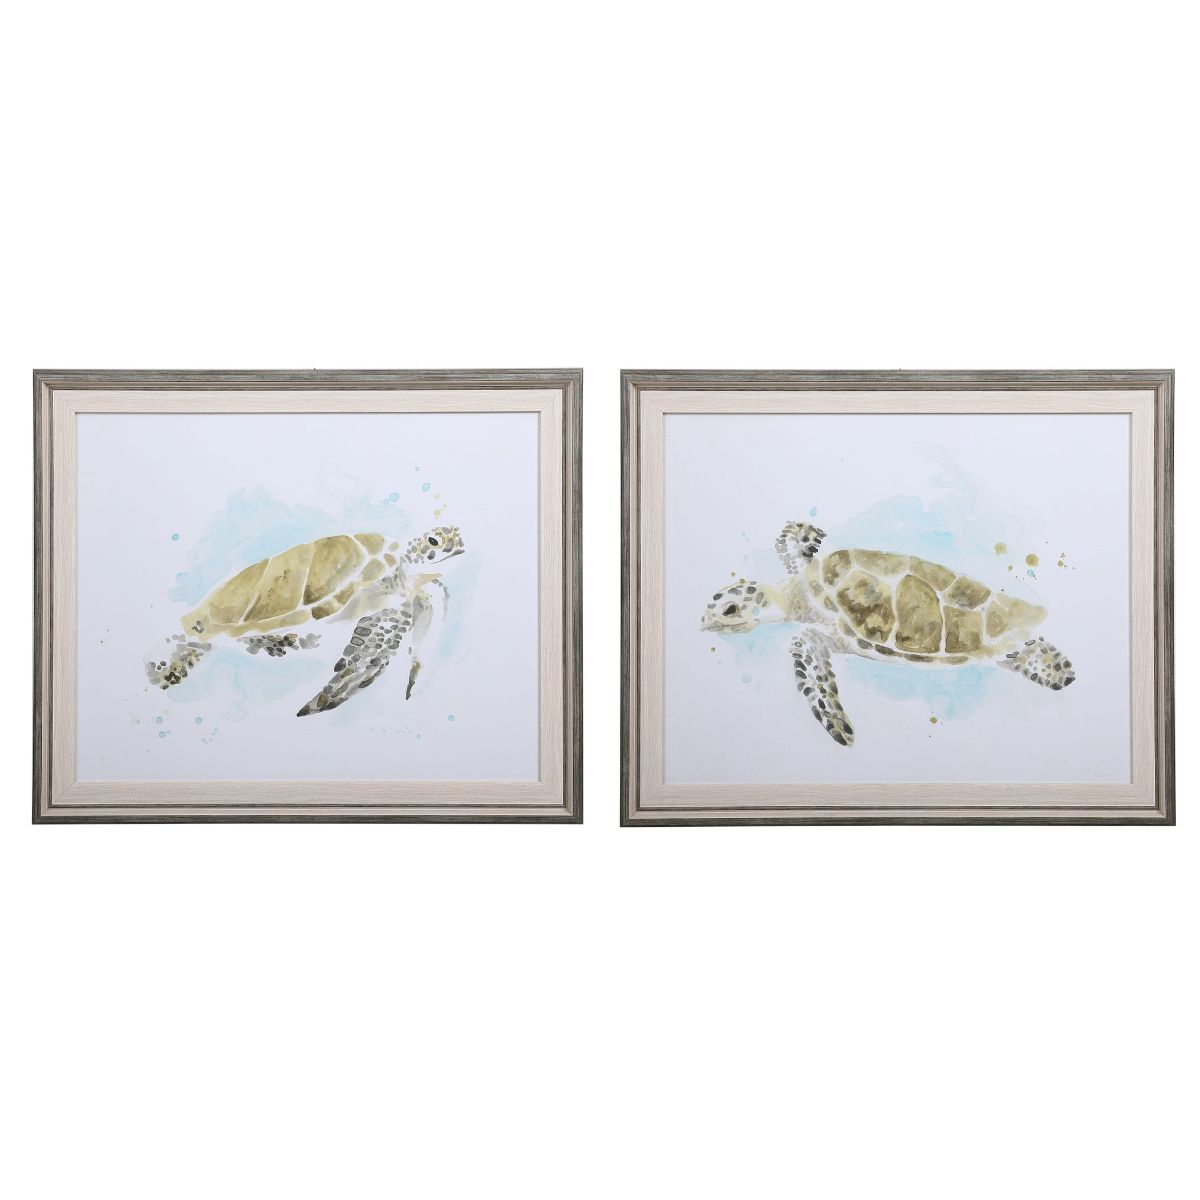 Uttermost Sea Turtle Study Watercolor Prints, S/2